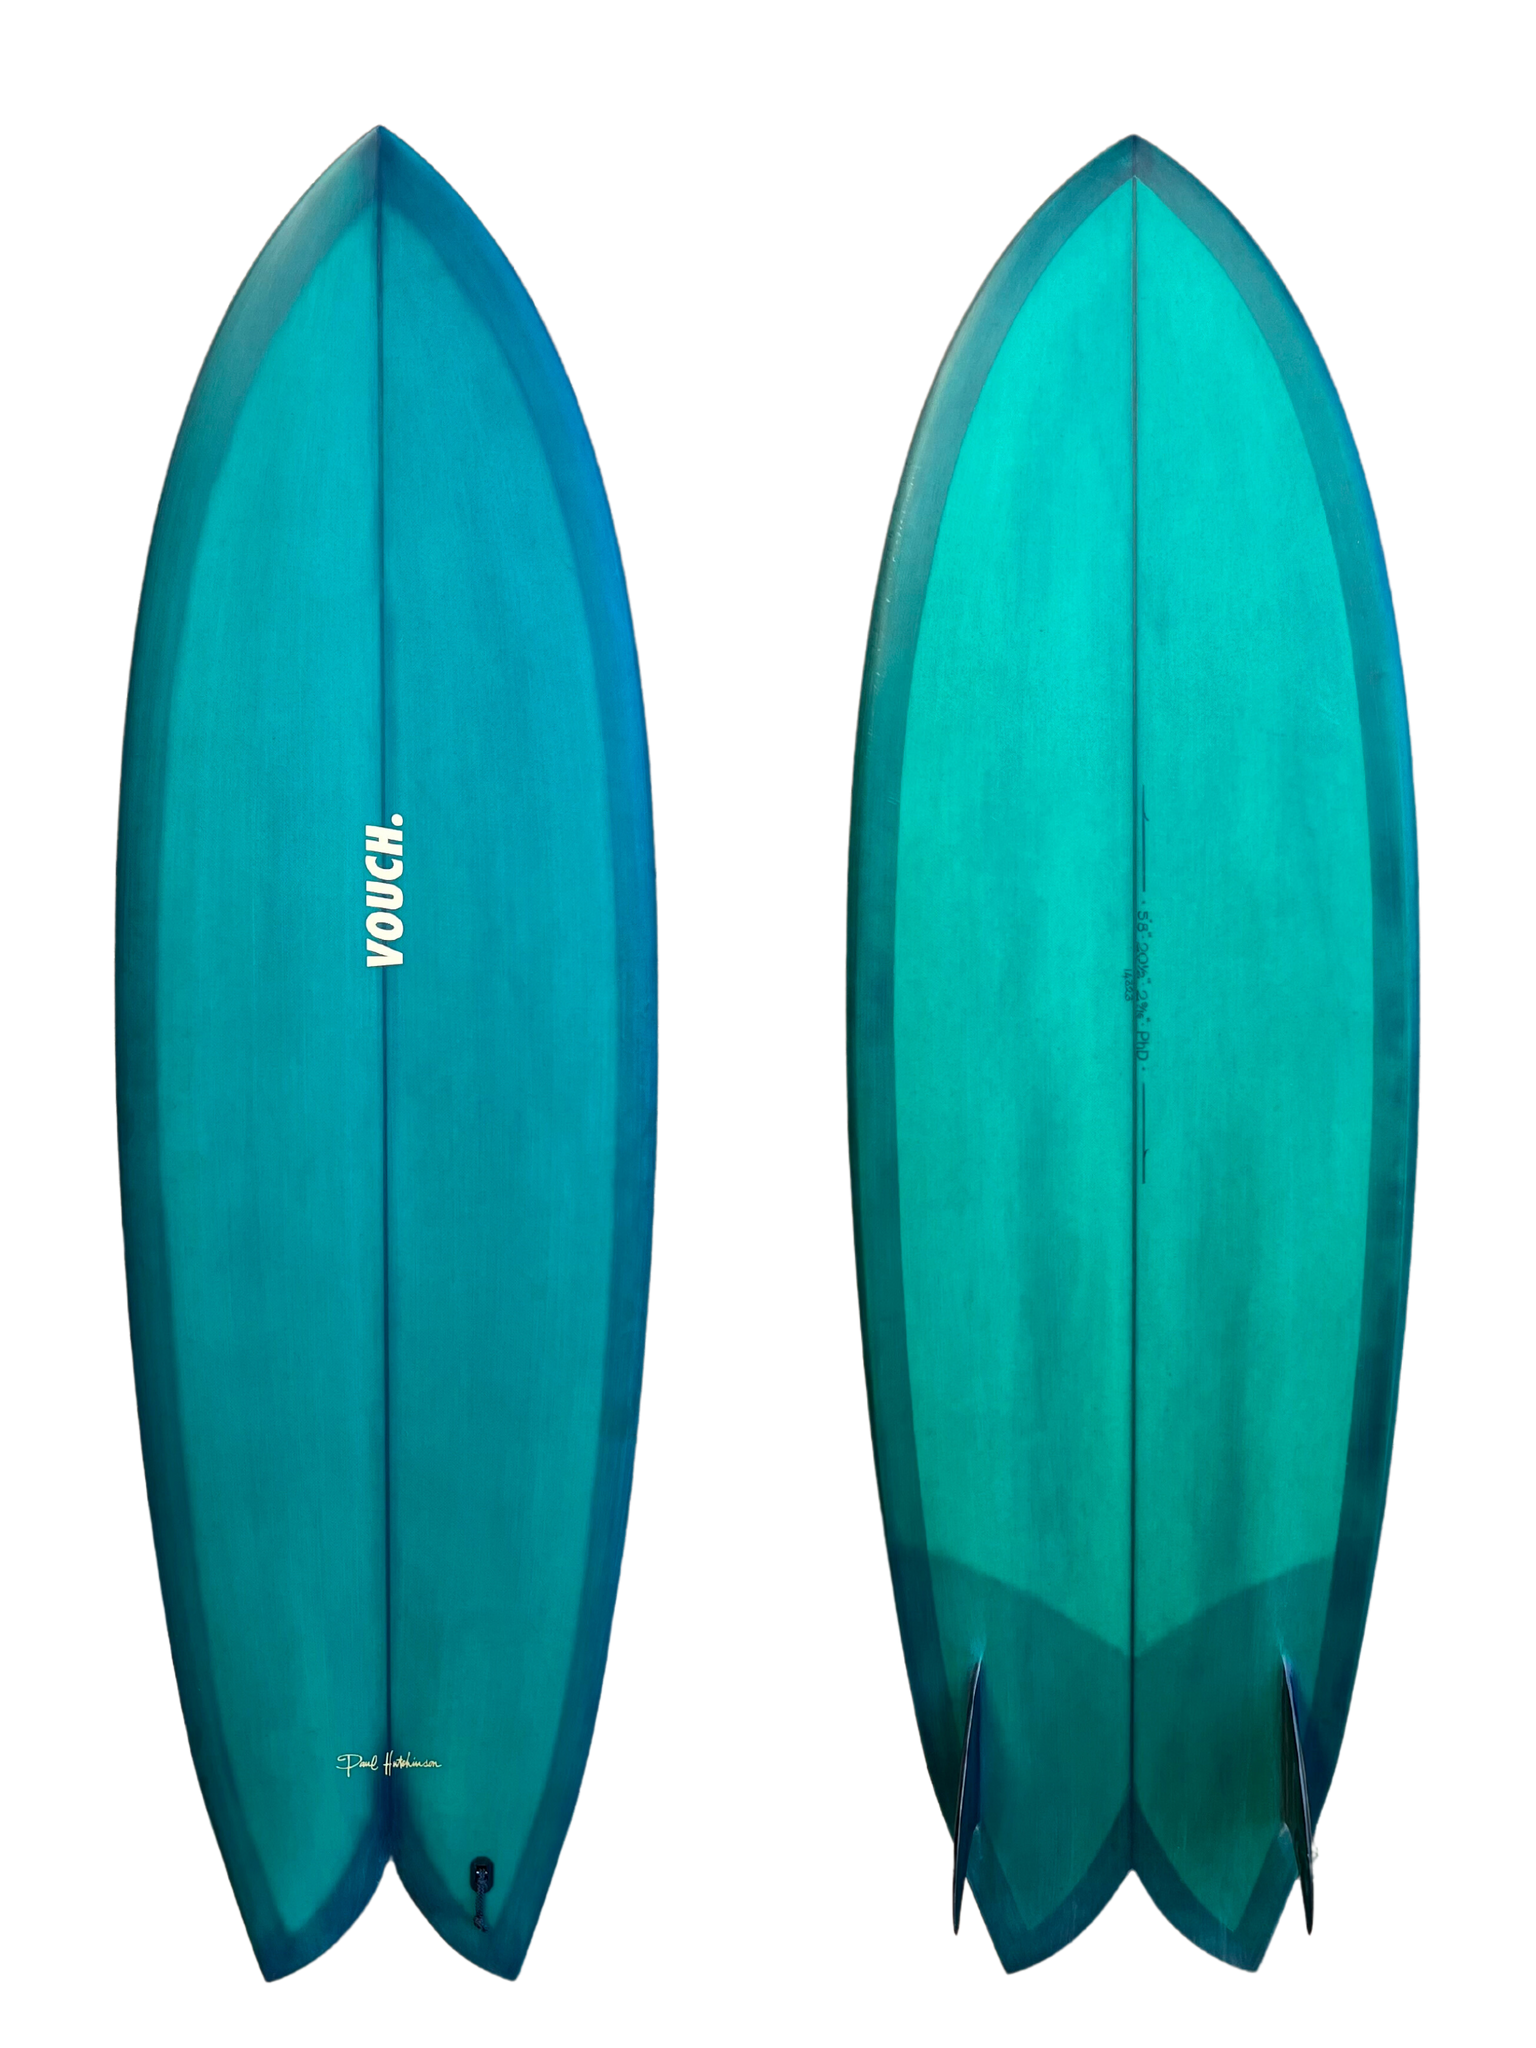 Vouch Surf 5'8" Refined Vish